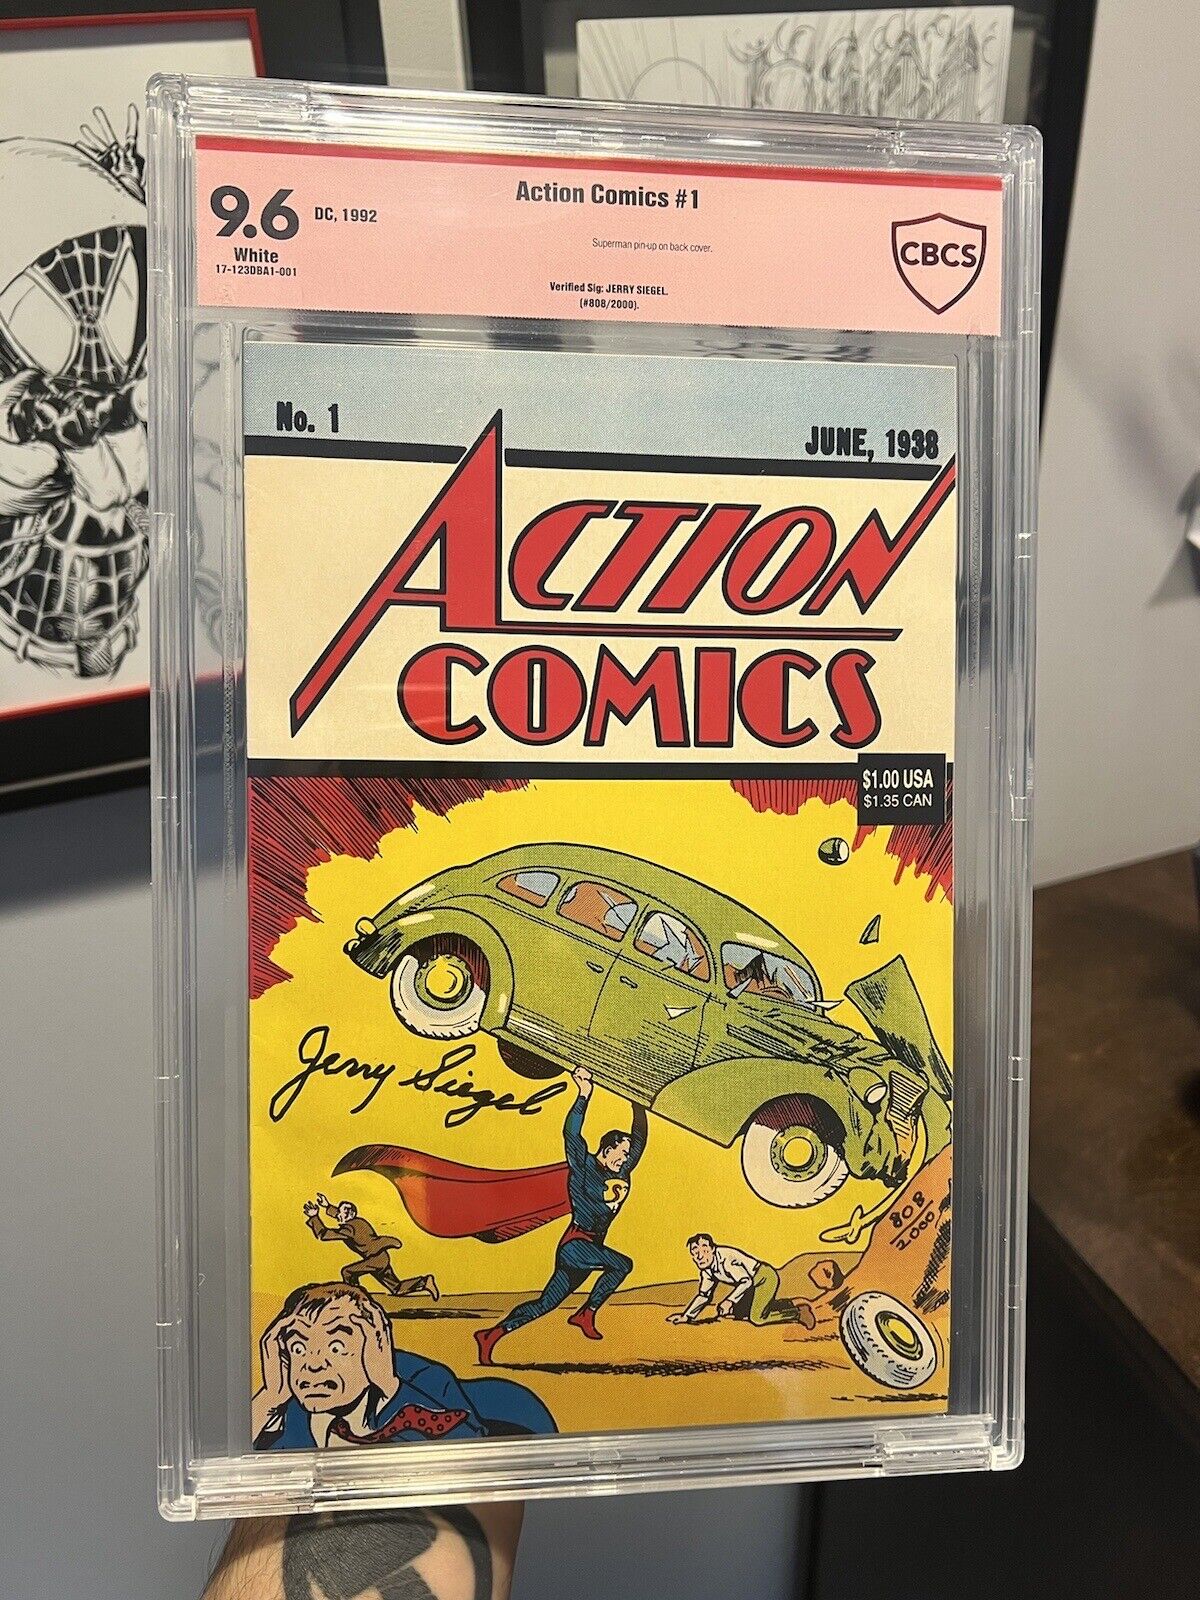 JERRY SIEGEL SIGNED ACTION COMICS #1 REPRINT • CBCS 9.6 W/COA Superman Creator